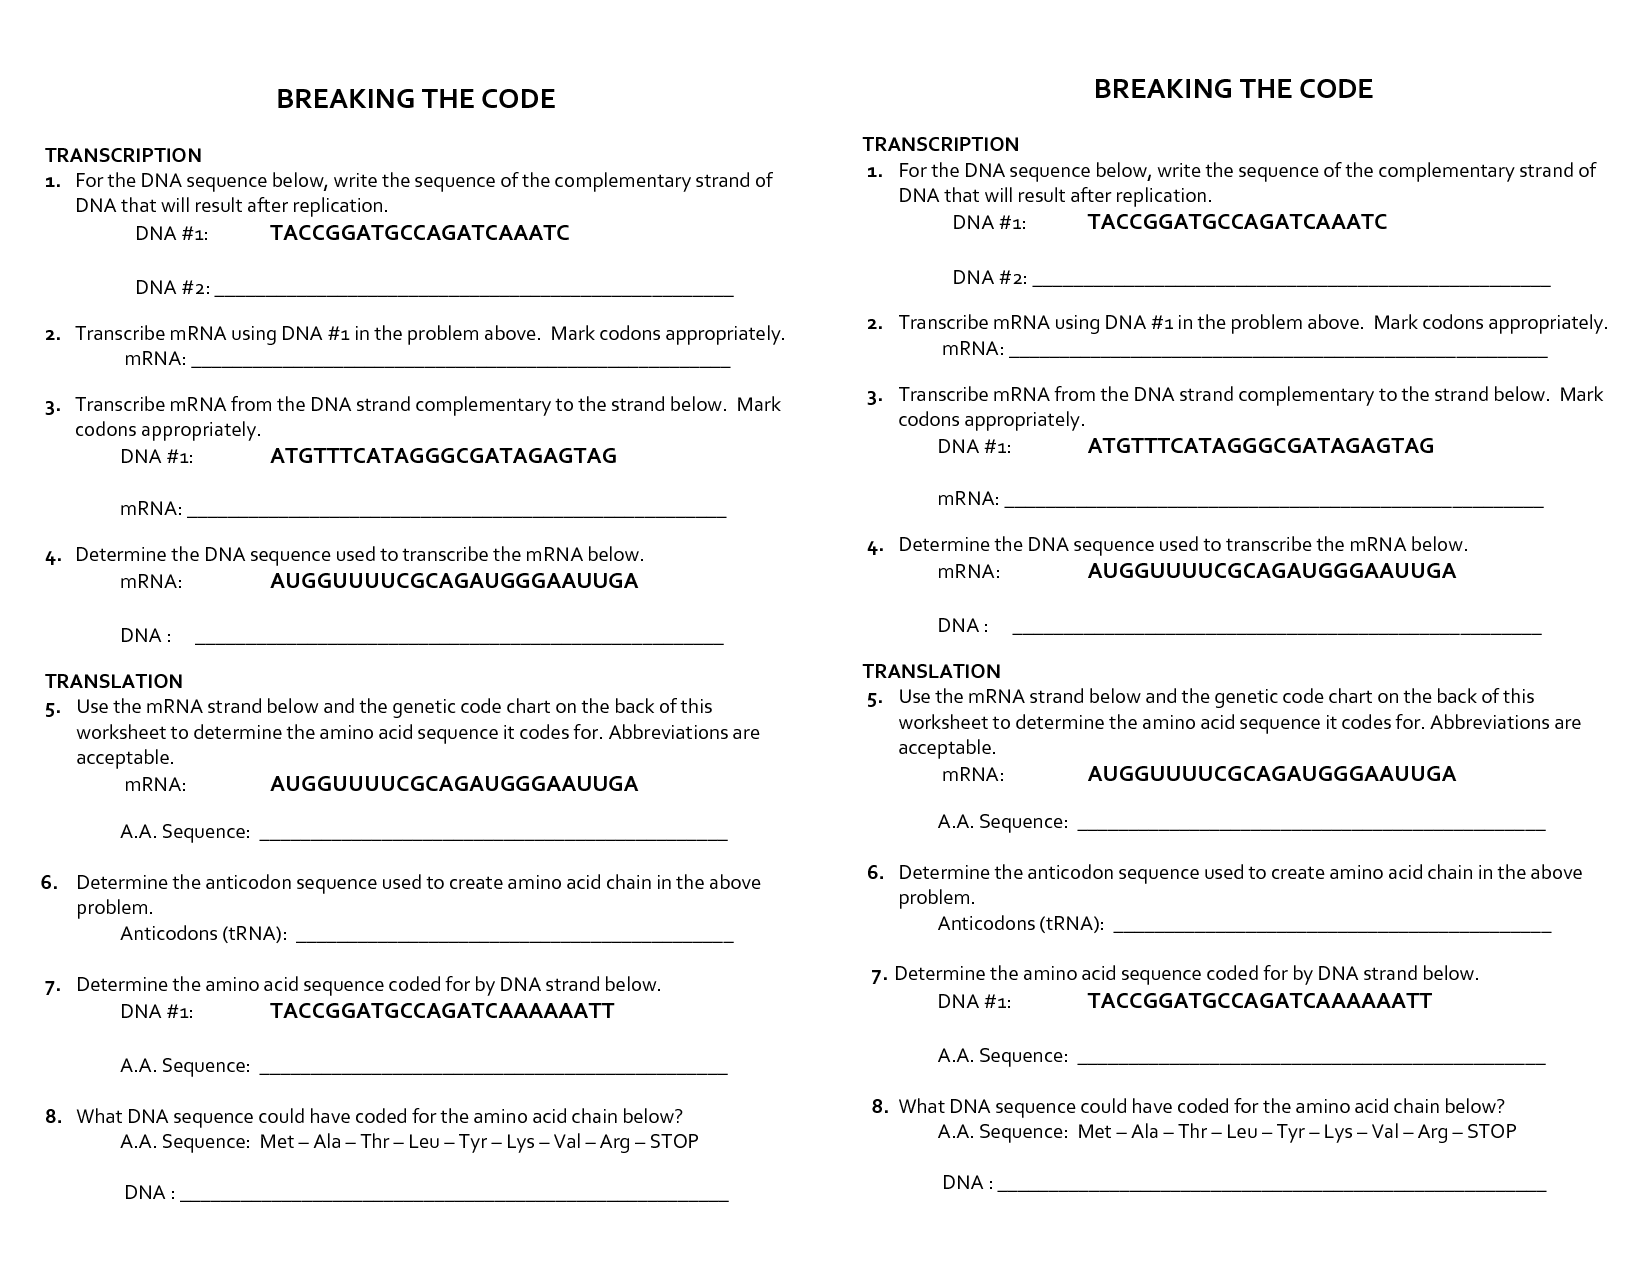 17 Best Images of Break The Code Worksheets - Christmas Code Worksheets